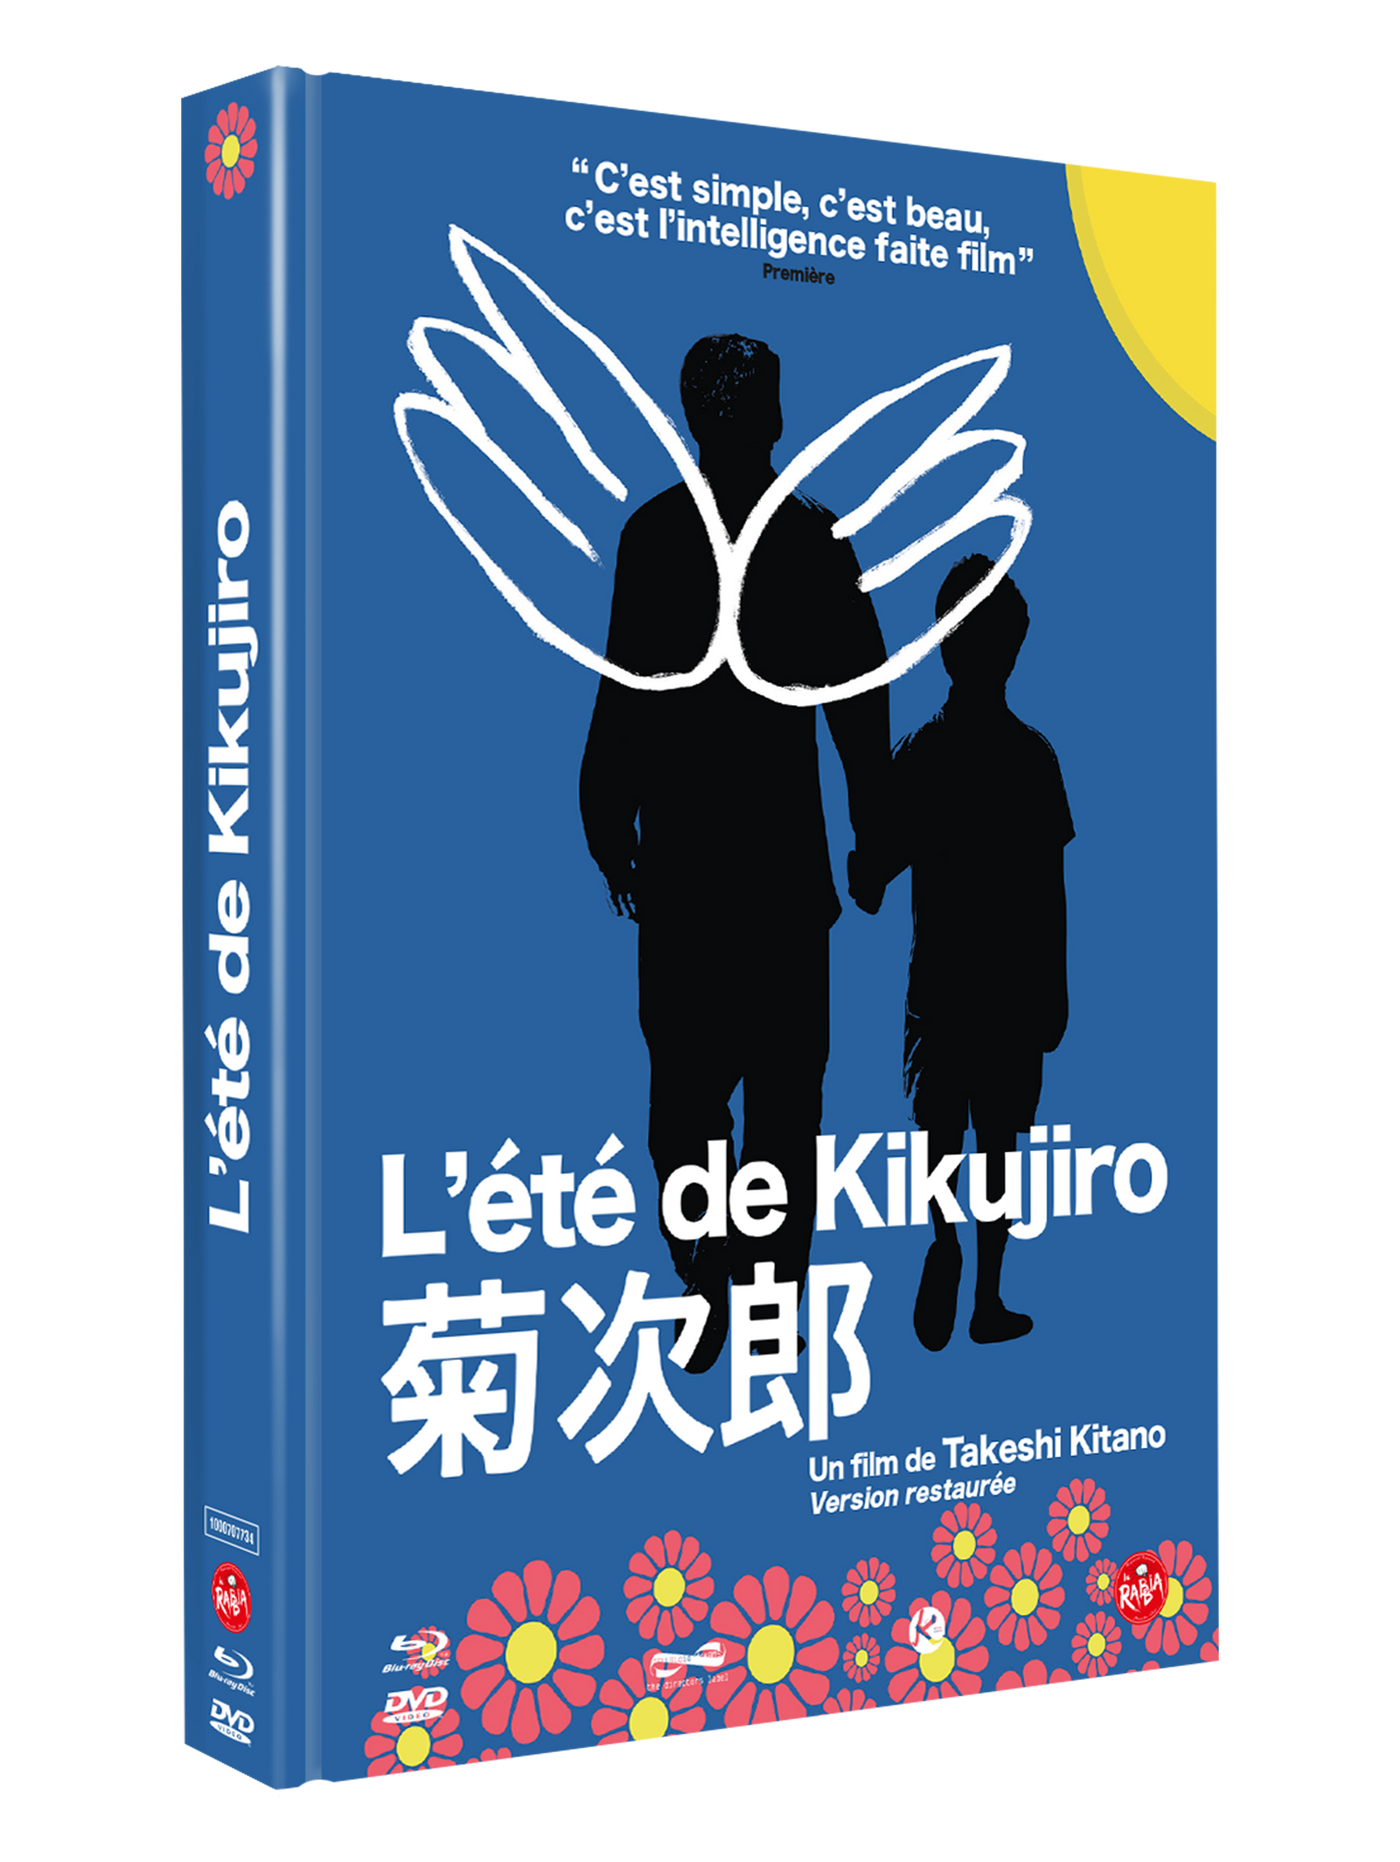 Médiabook "L'été de Kikujiro"